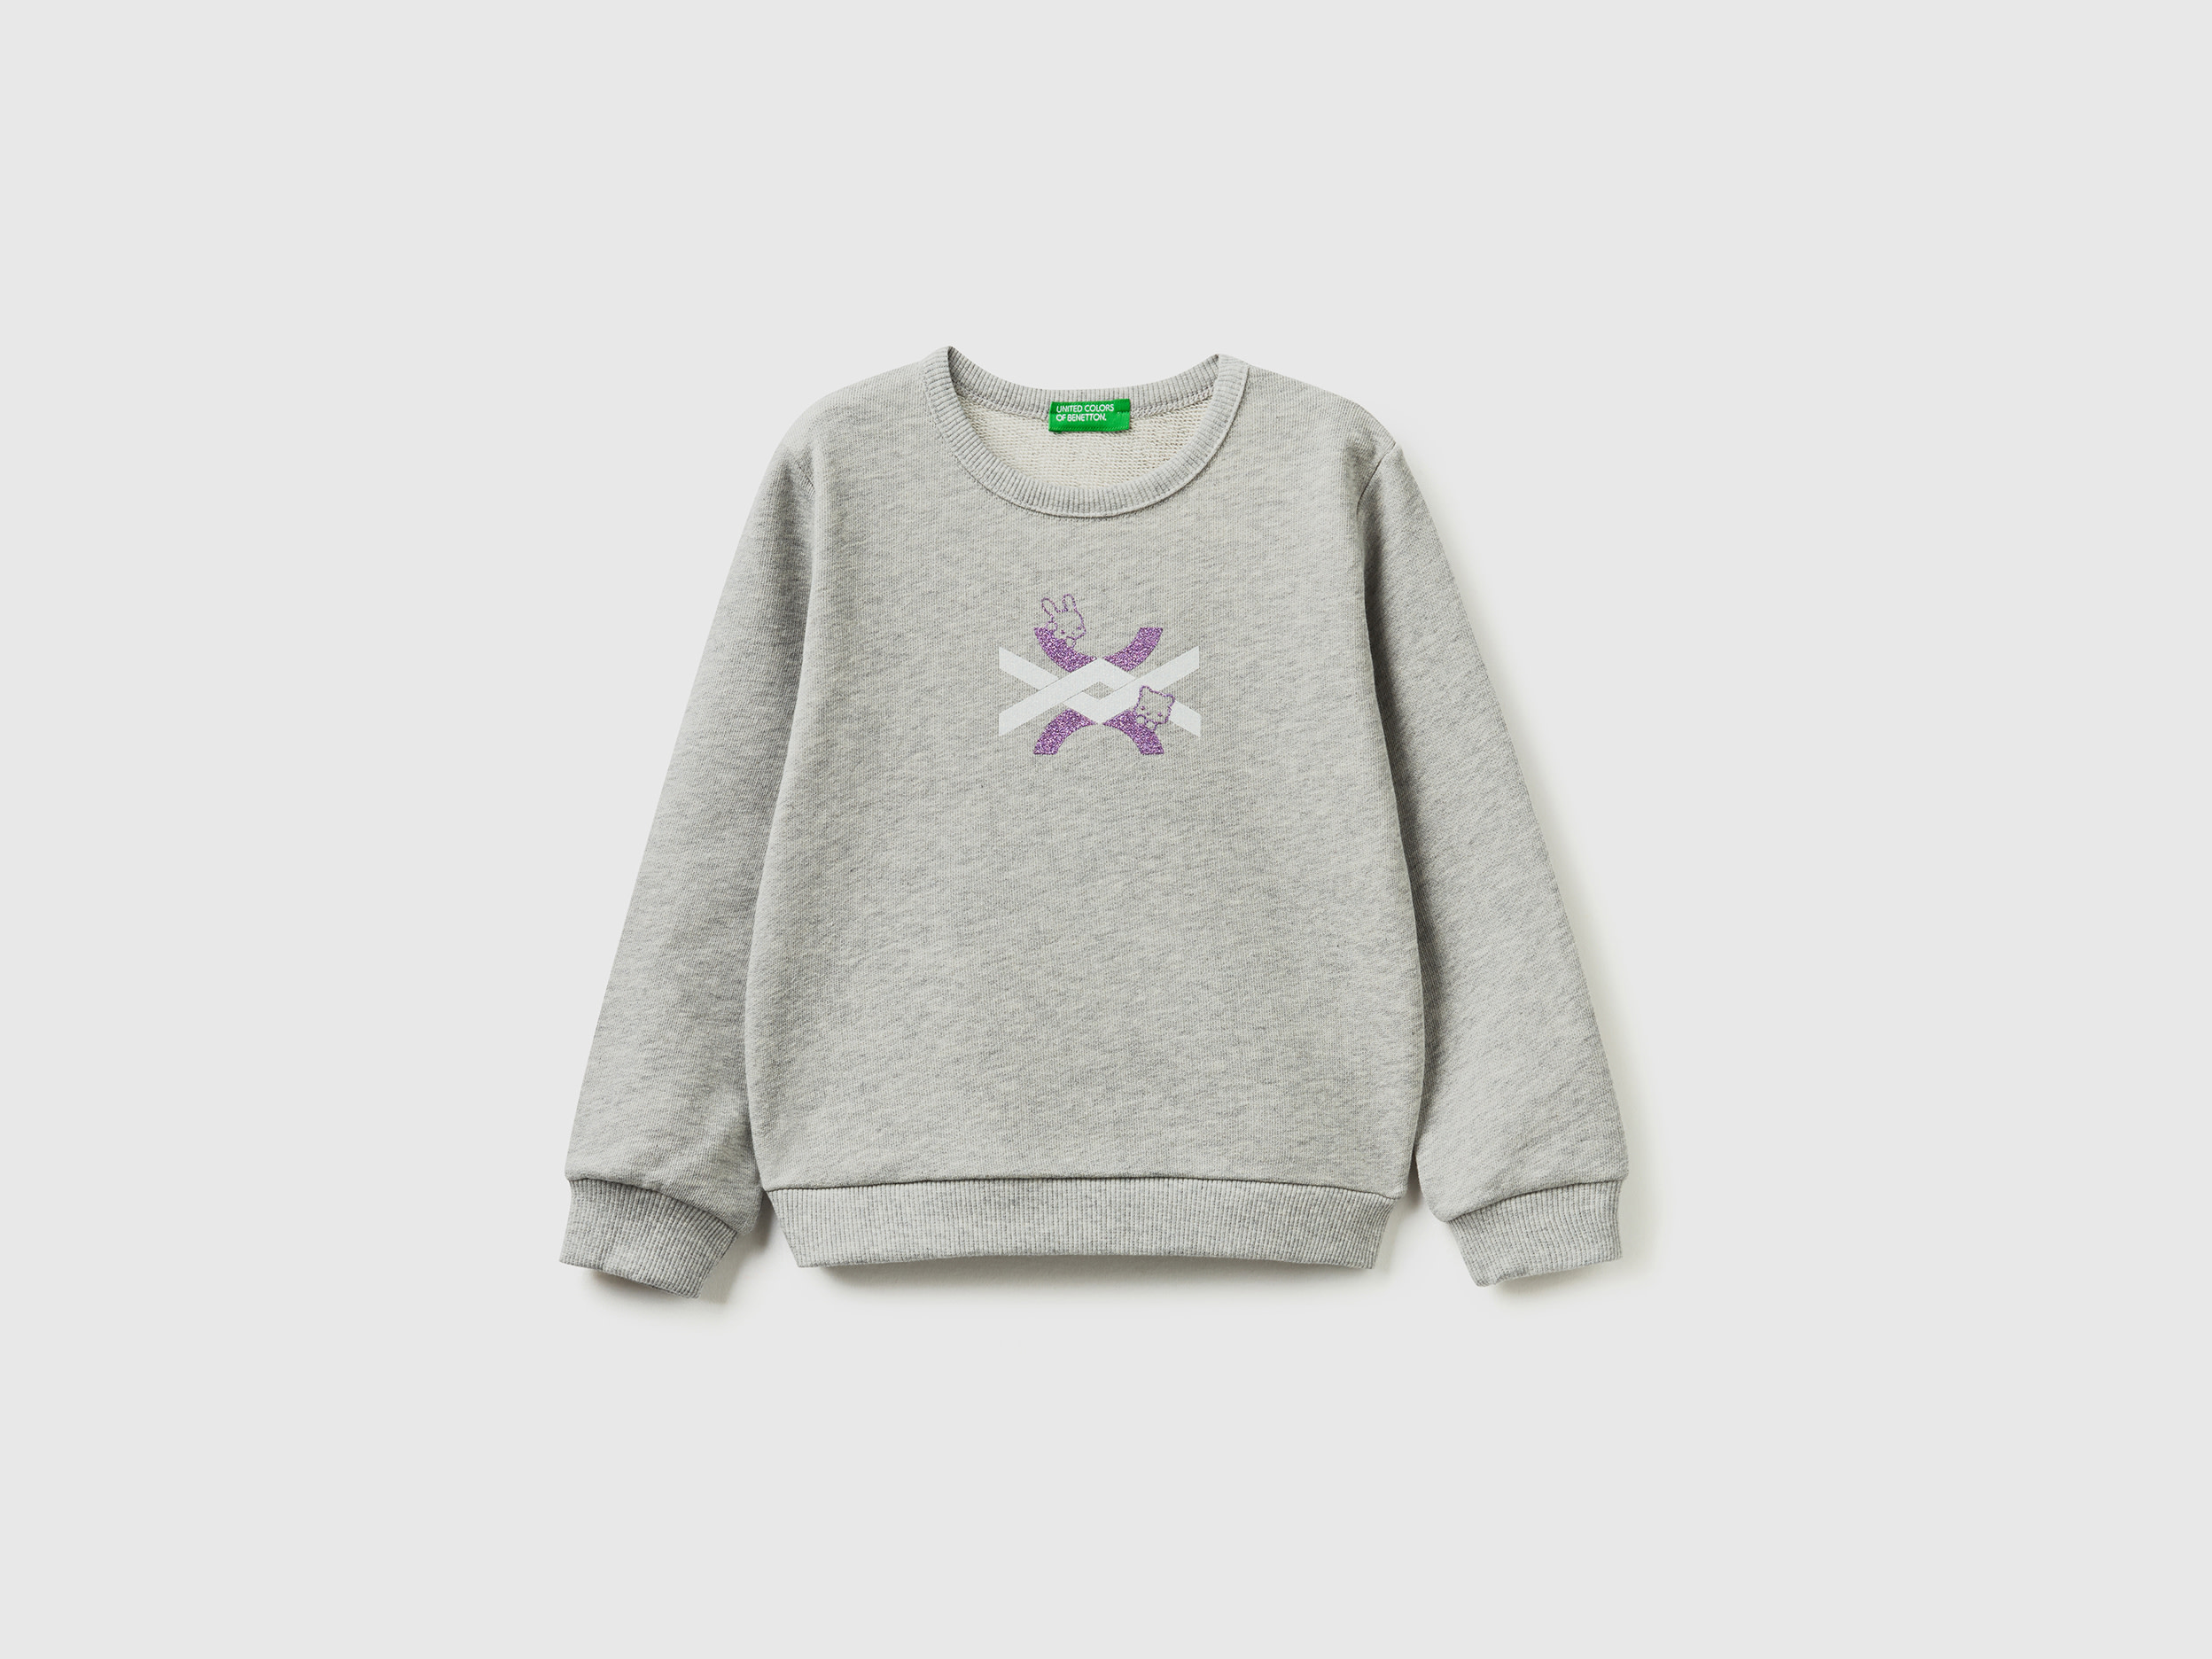 Benetton, Slub Gray Sweatshirt In Organic Cotton With Glittery Print, size 3-4, Light Gray, Kids